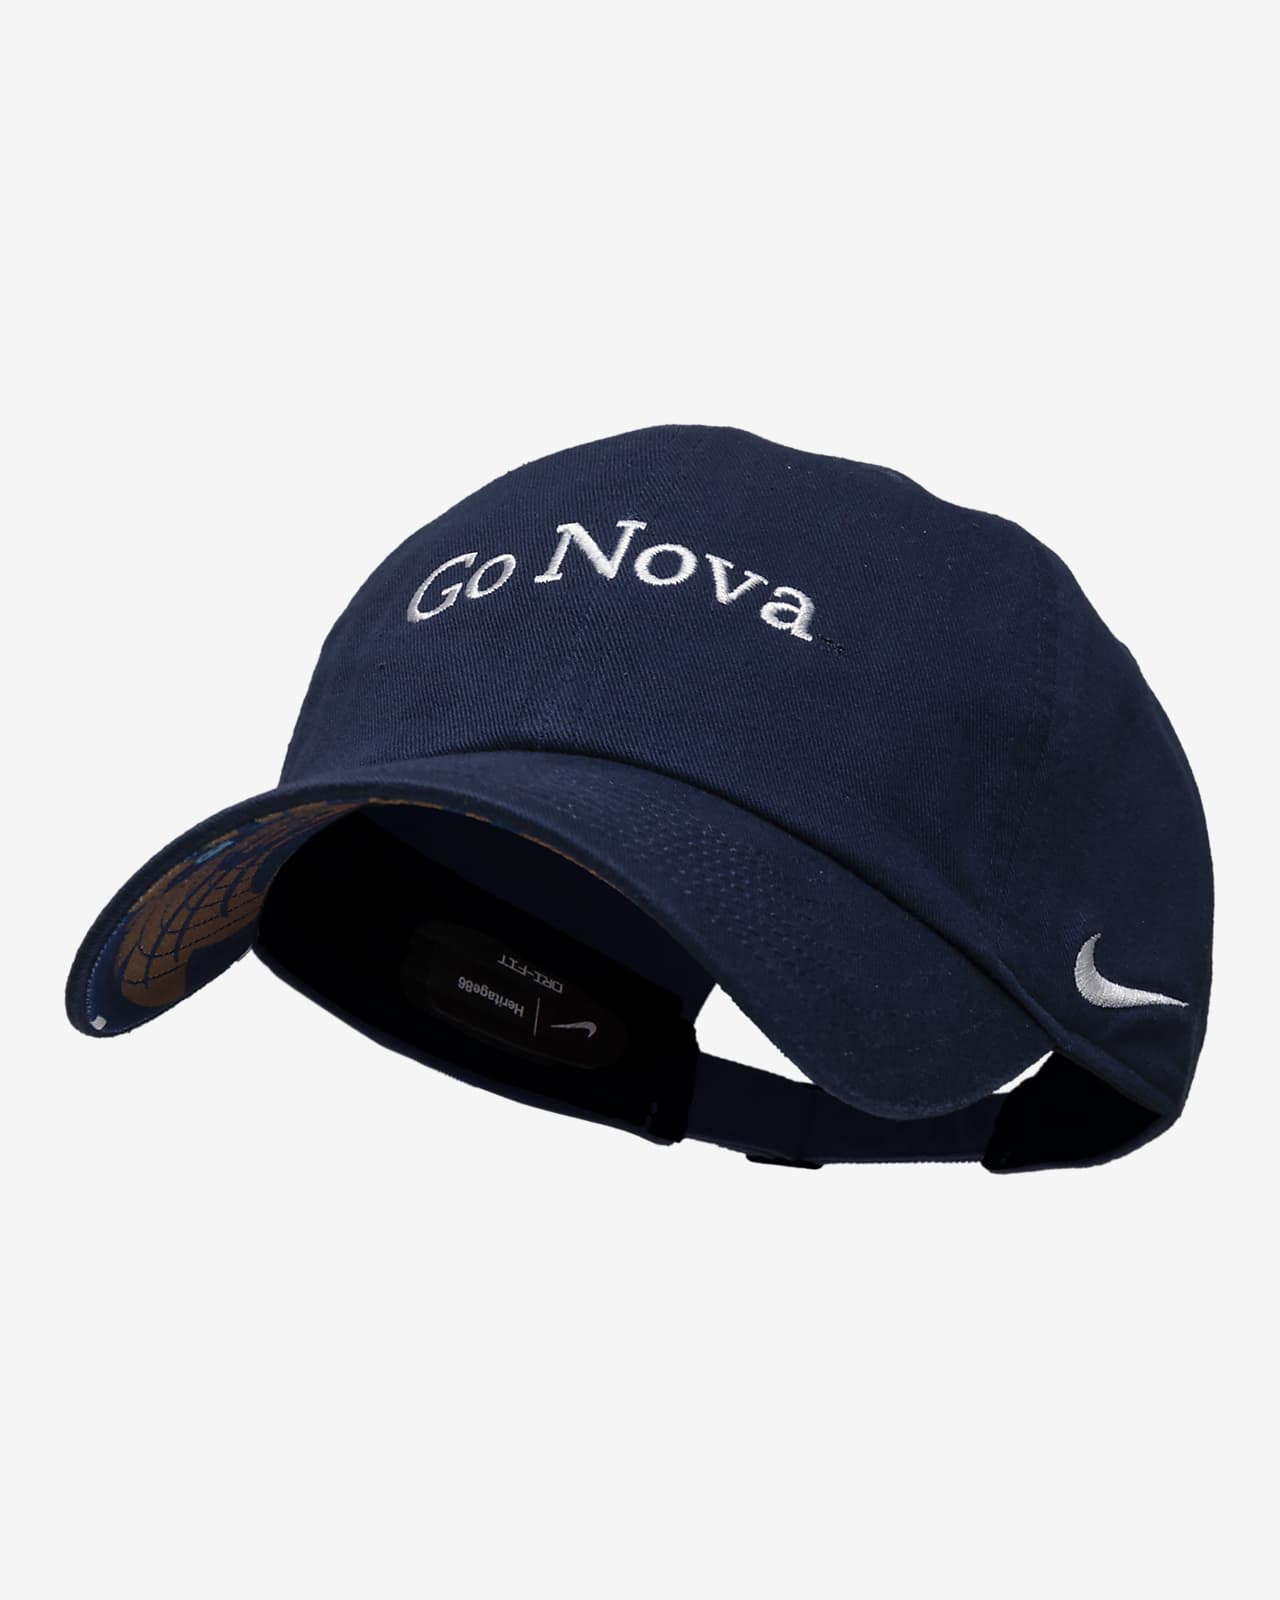 Villanova Nike College Cap